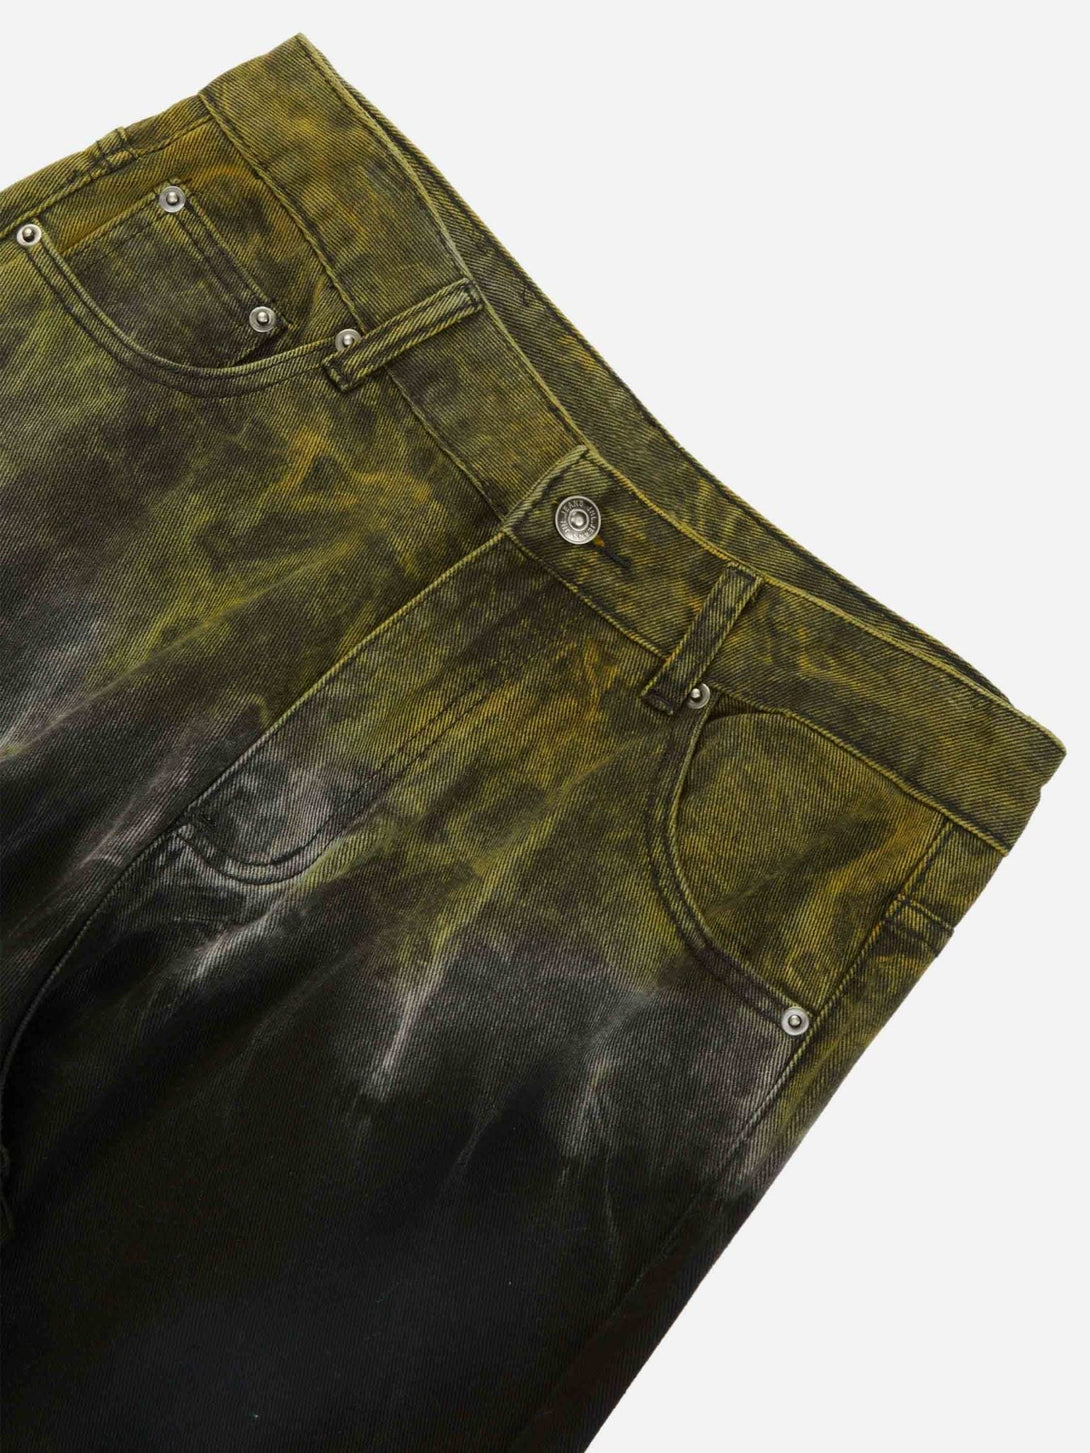 Majesda® - Graffiti Fun Tie-Dye Straight Jeans- Outfit Ideas - Streetwear Fashion - majesda.com